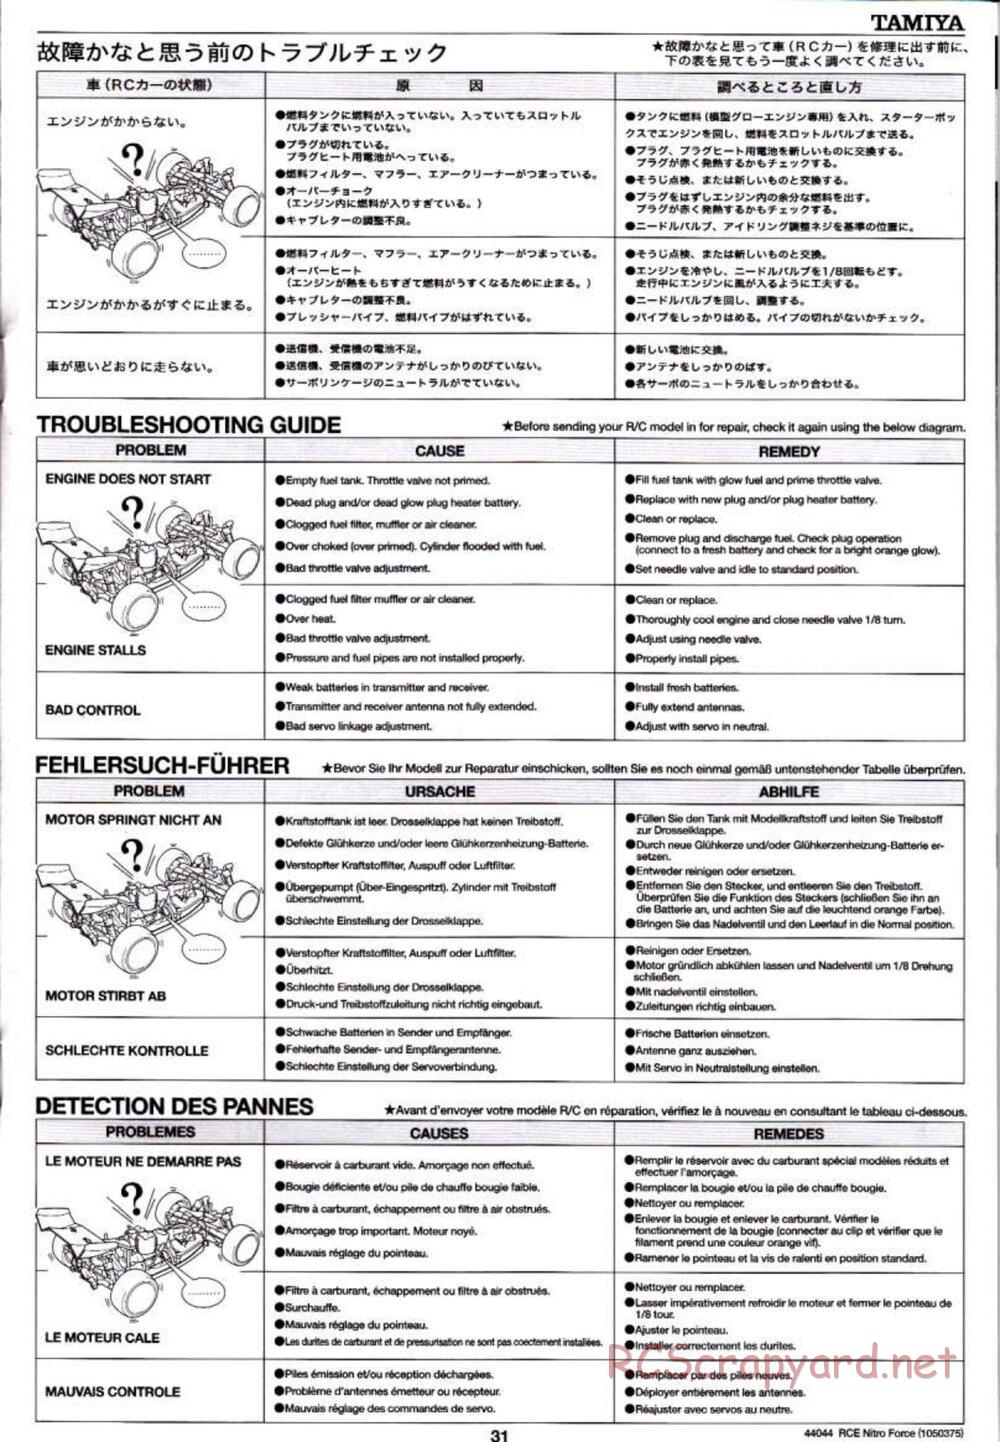 Tamiya - Nitro Force - NDF-01 Chassis - Manual - Page 31